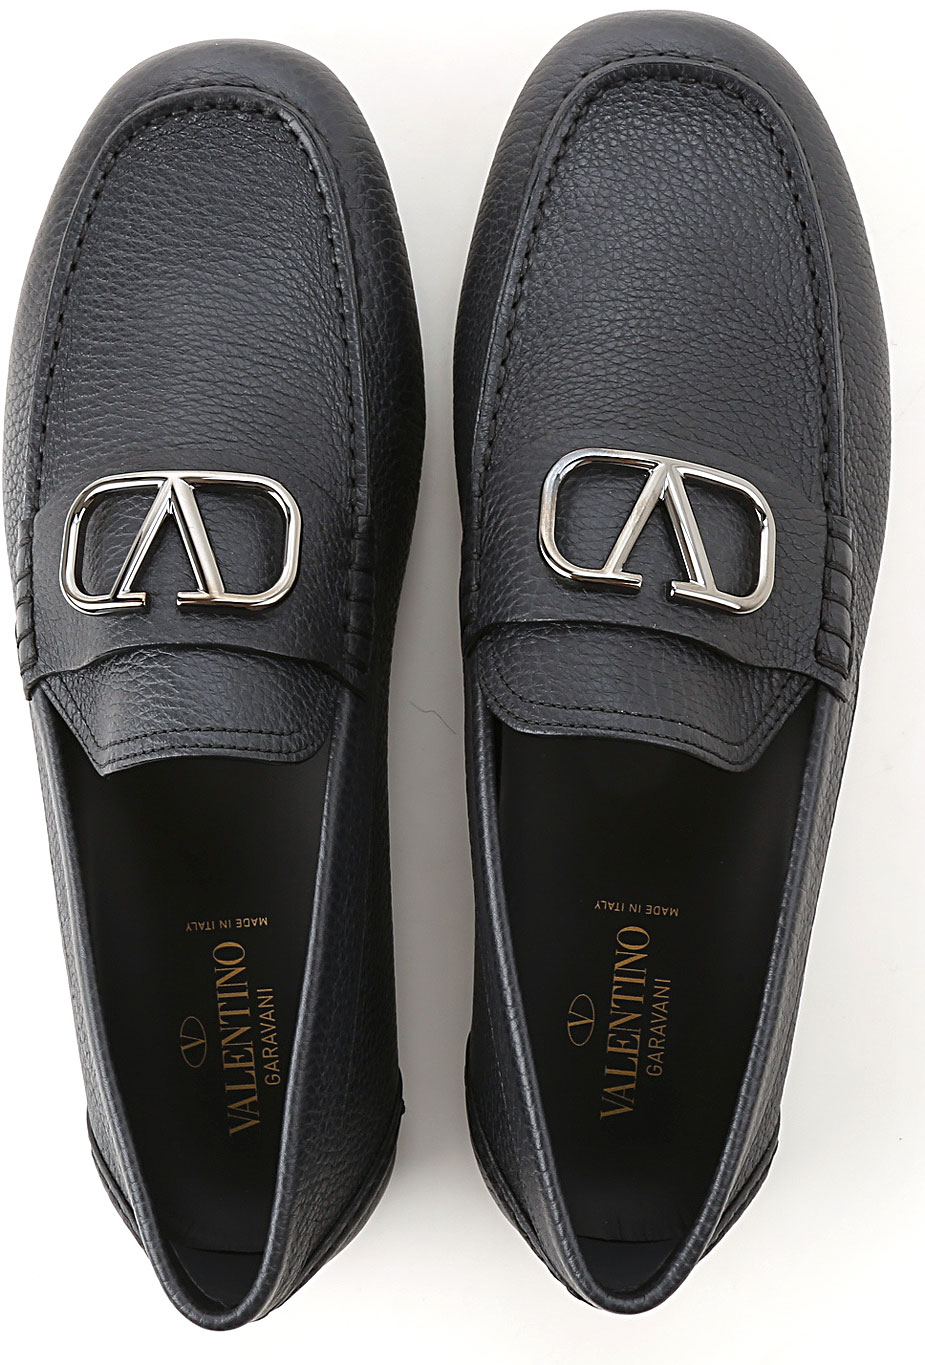 Mens Shoes Valentino Garavani, Style code: vy2s0c32-yst-0n0